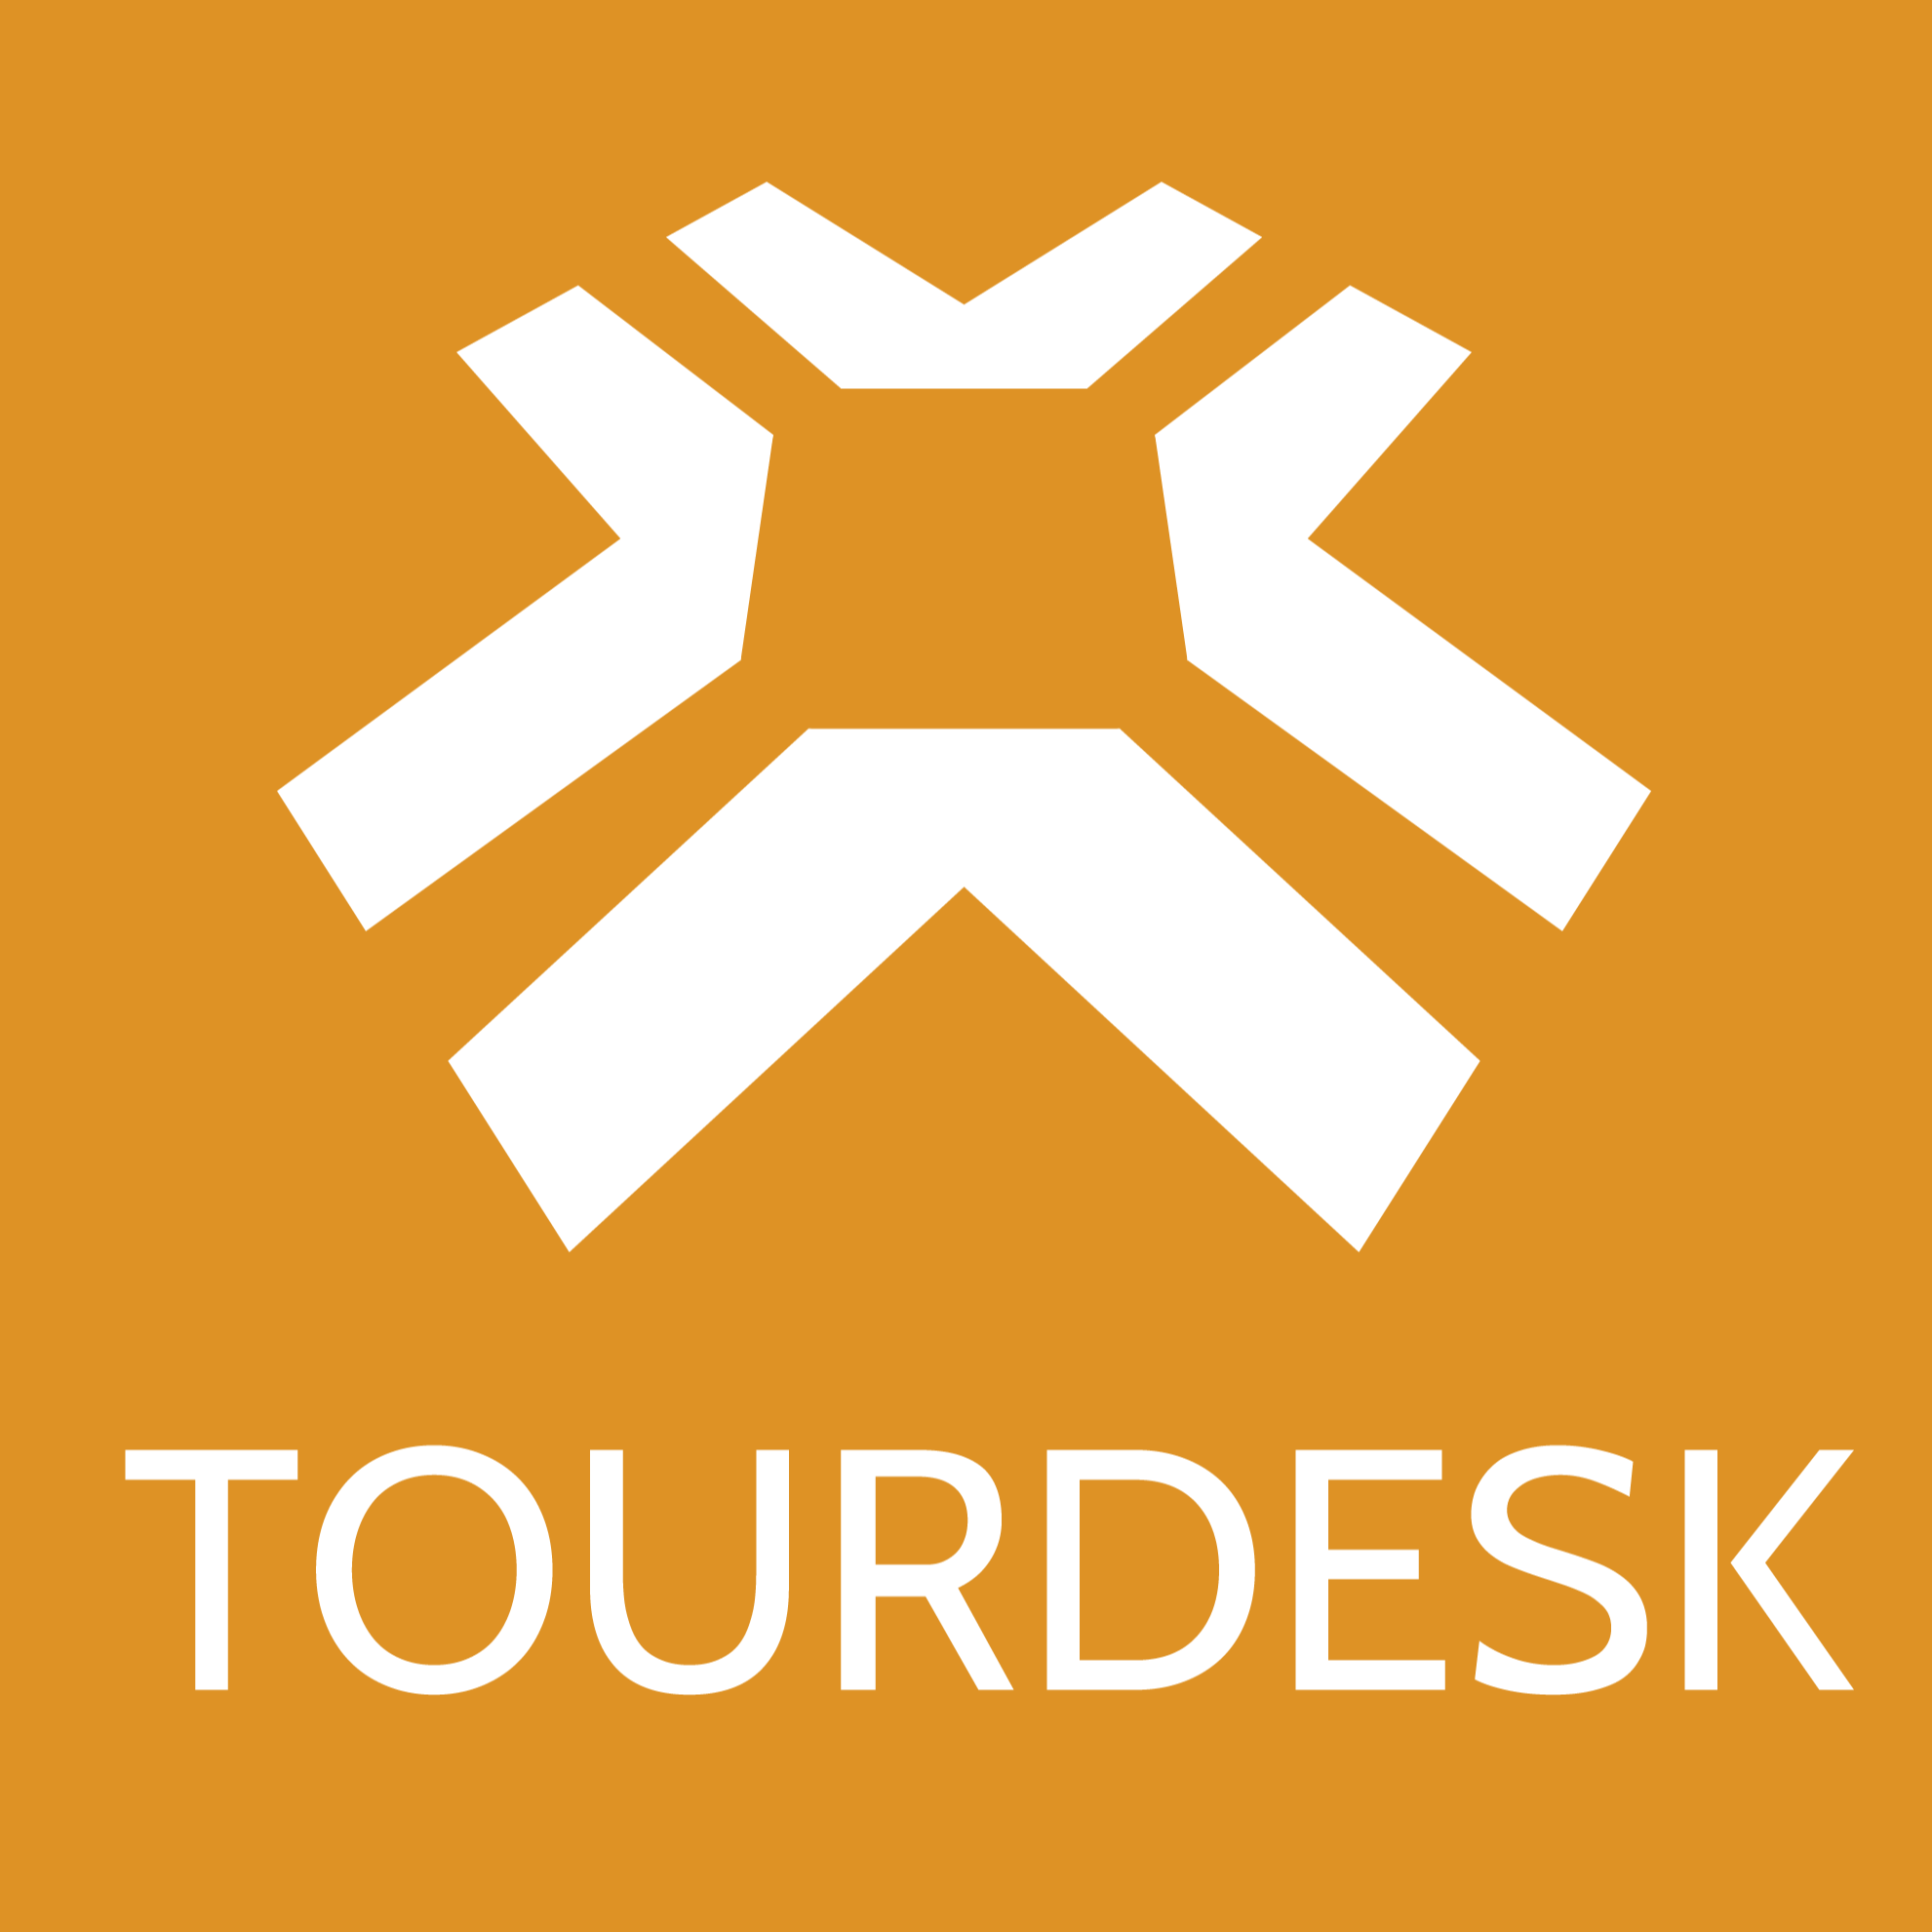 Tourdesk